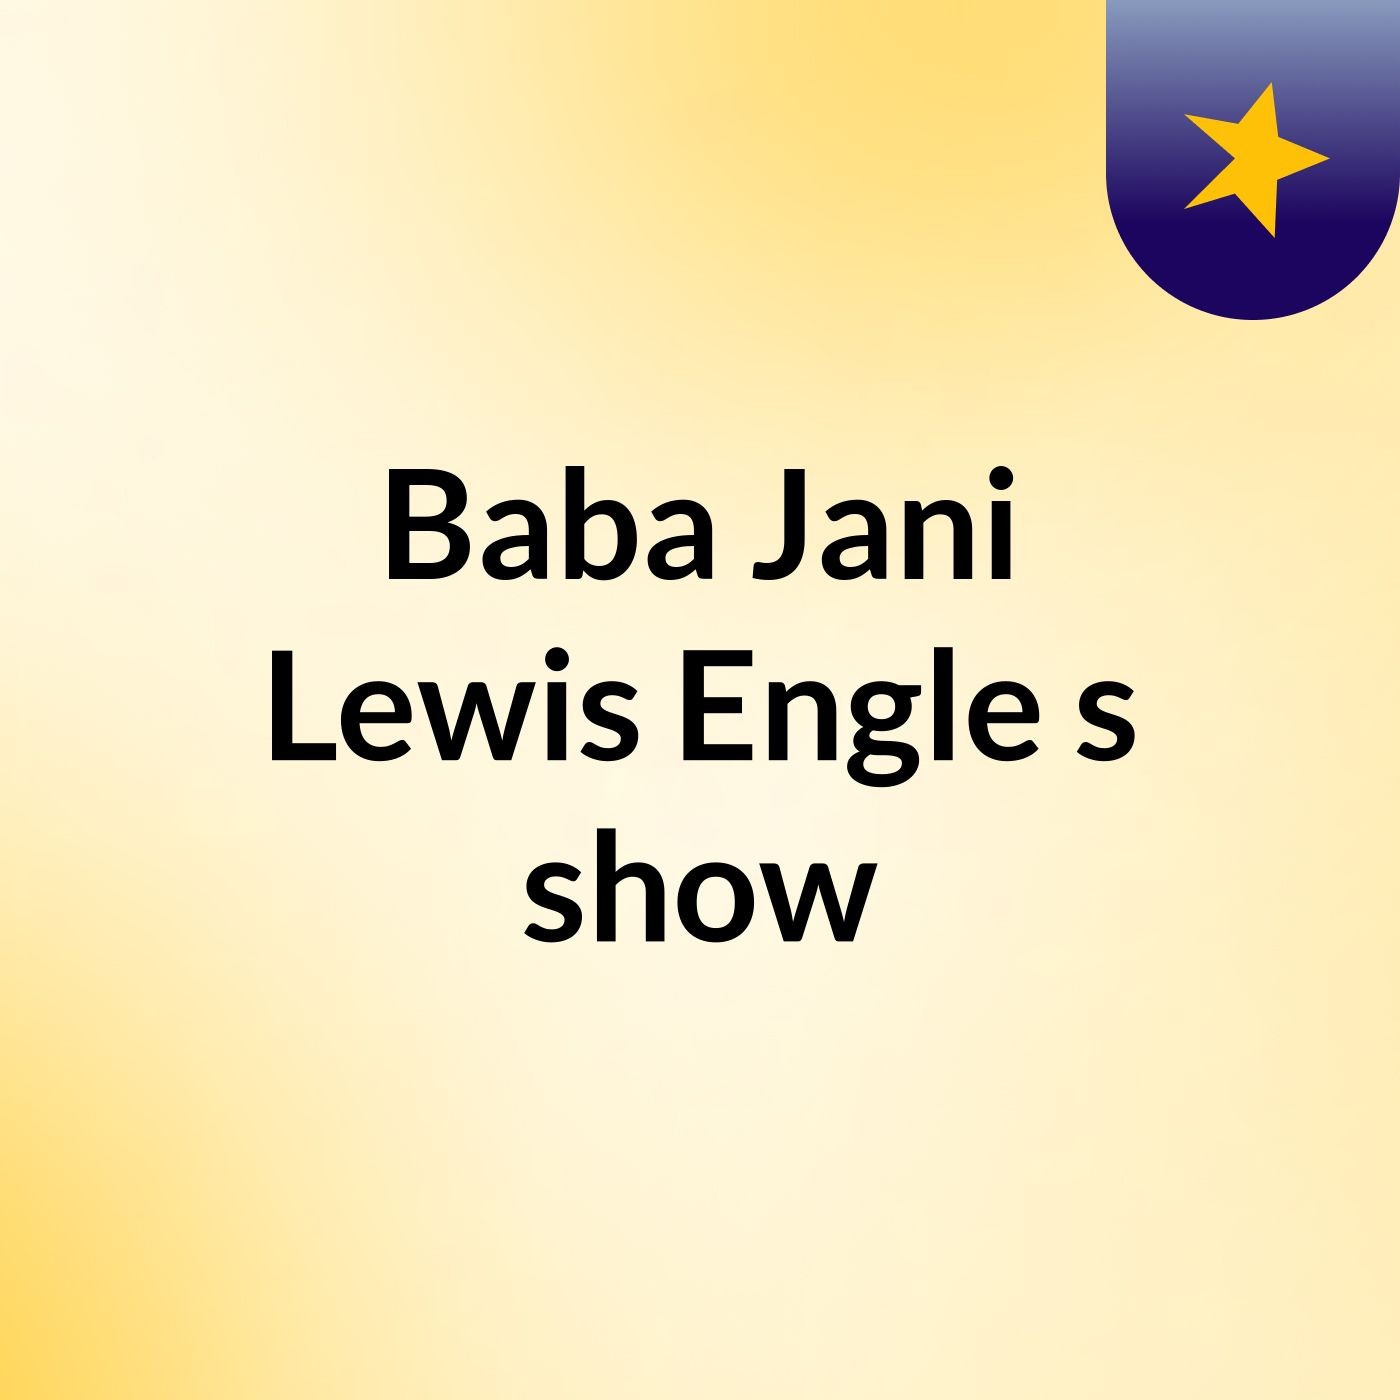 Episode 5 - Baba Jani, Lewis Engle's show